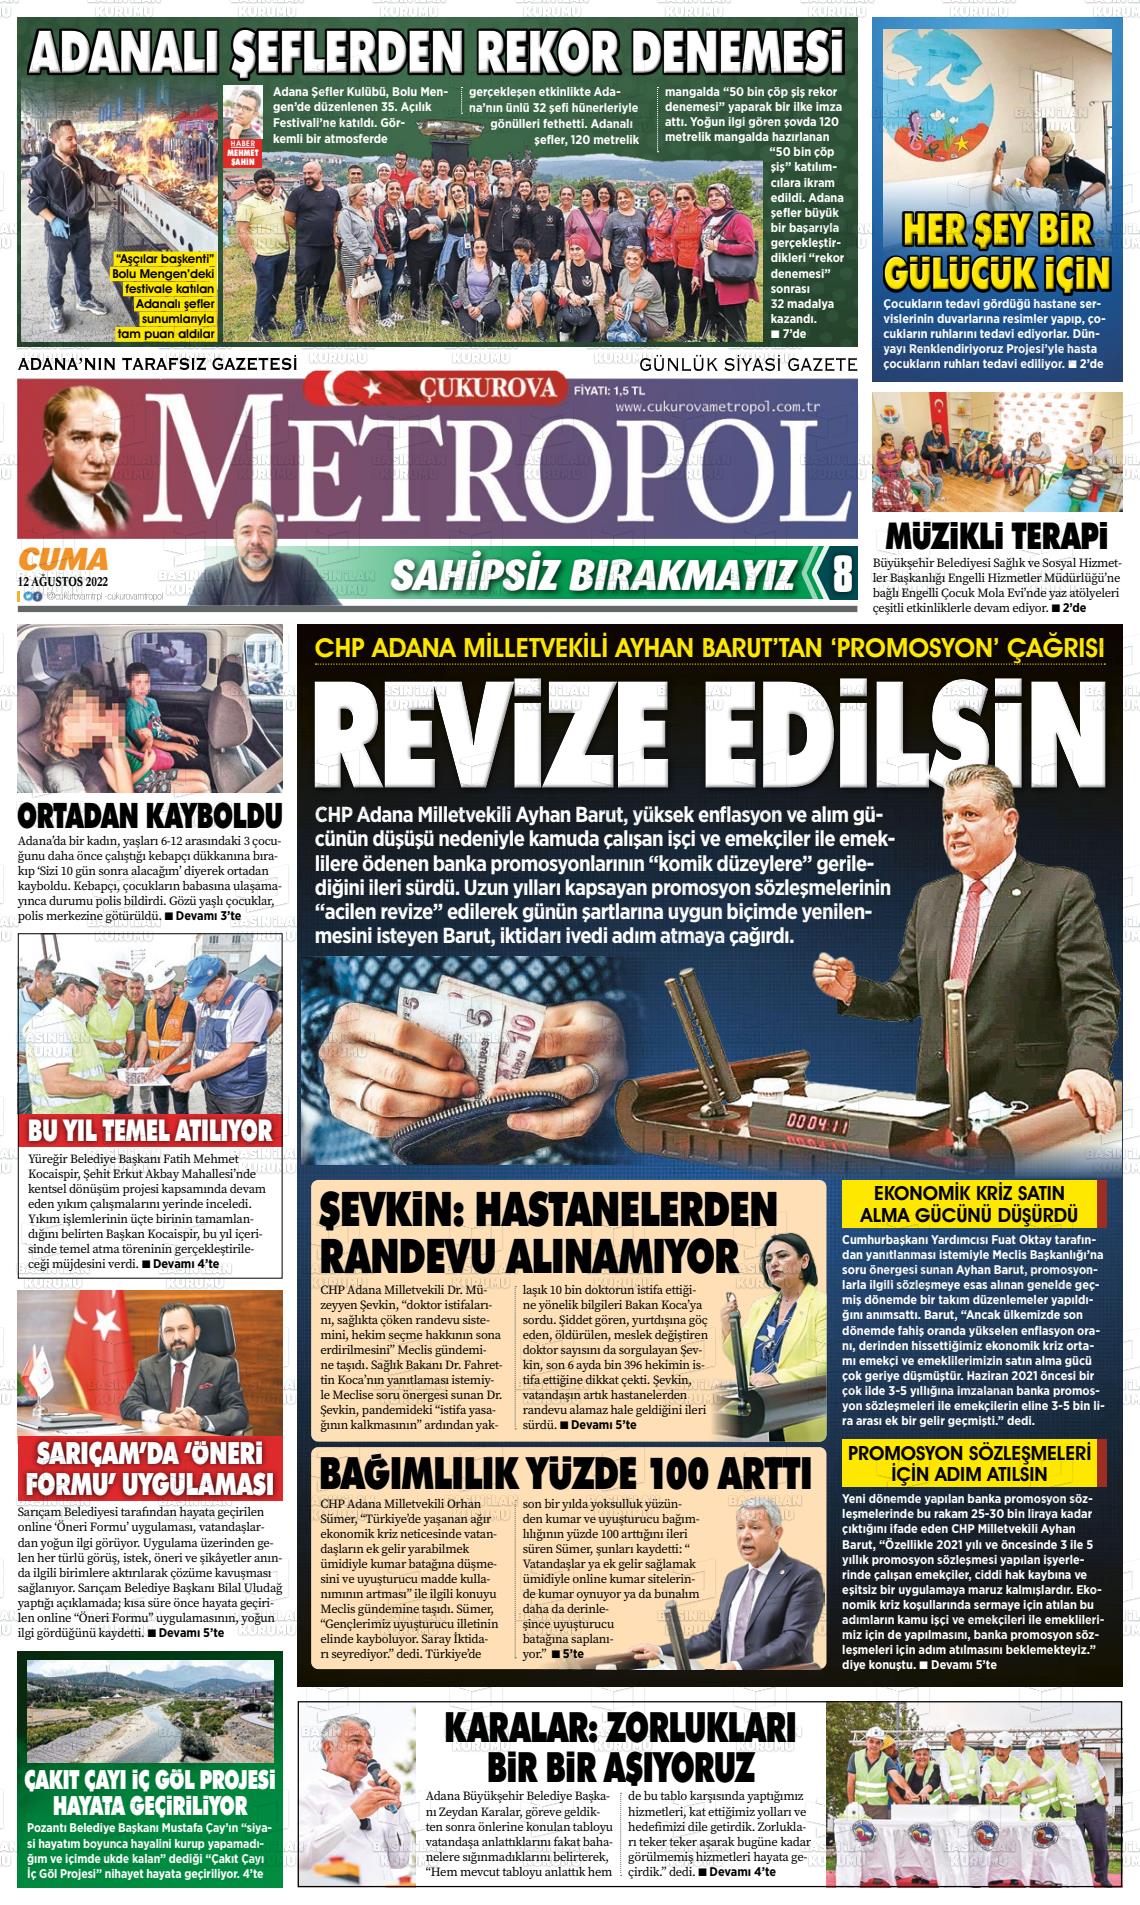 12 Ağustos 2022 Çukurova Metropol Gazete Manşeti